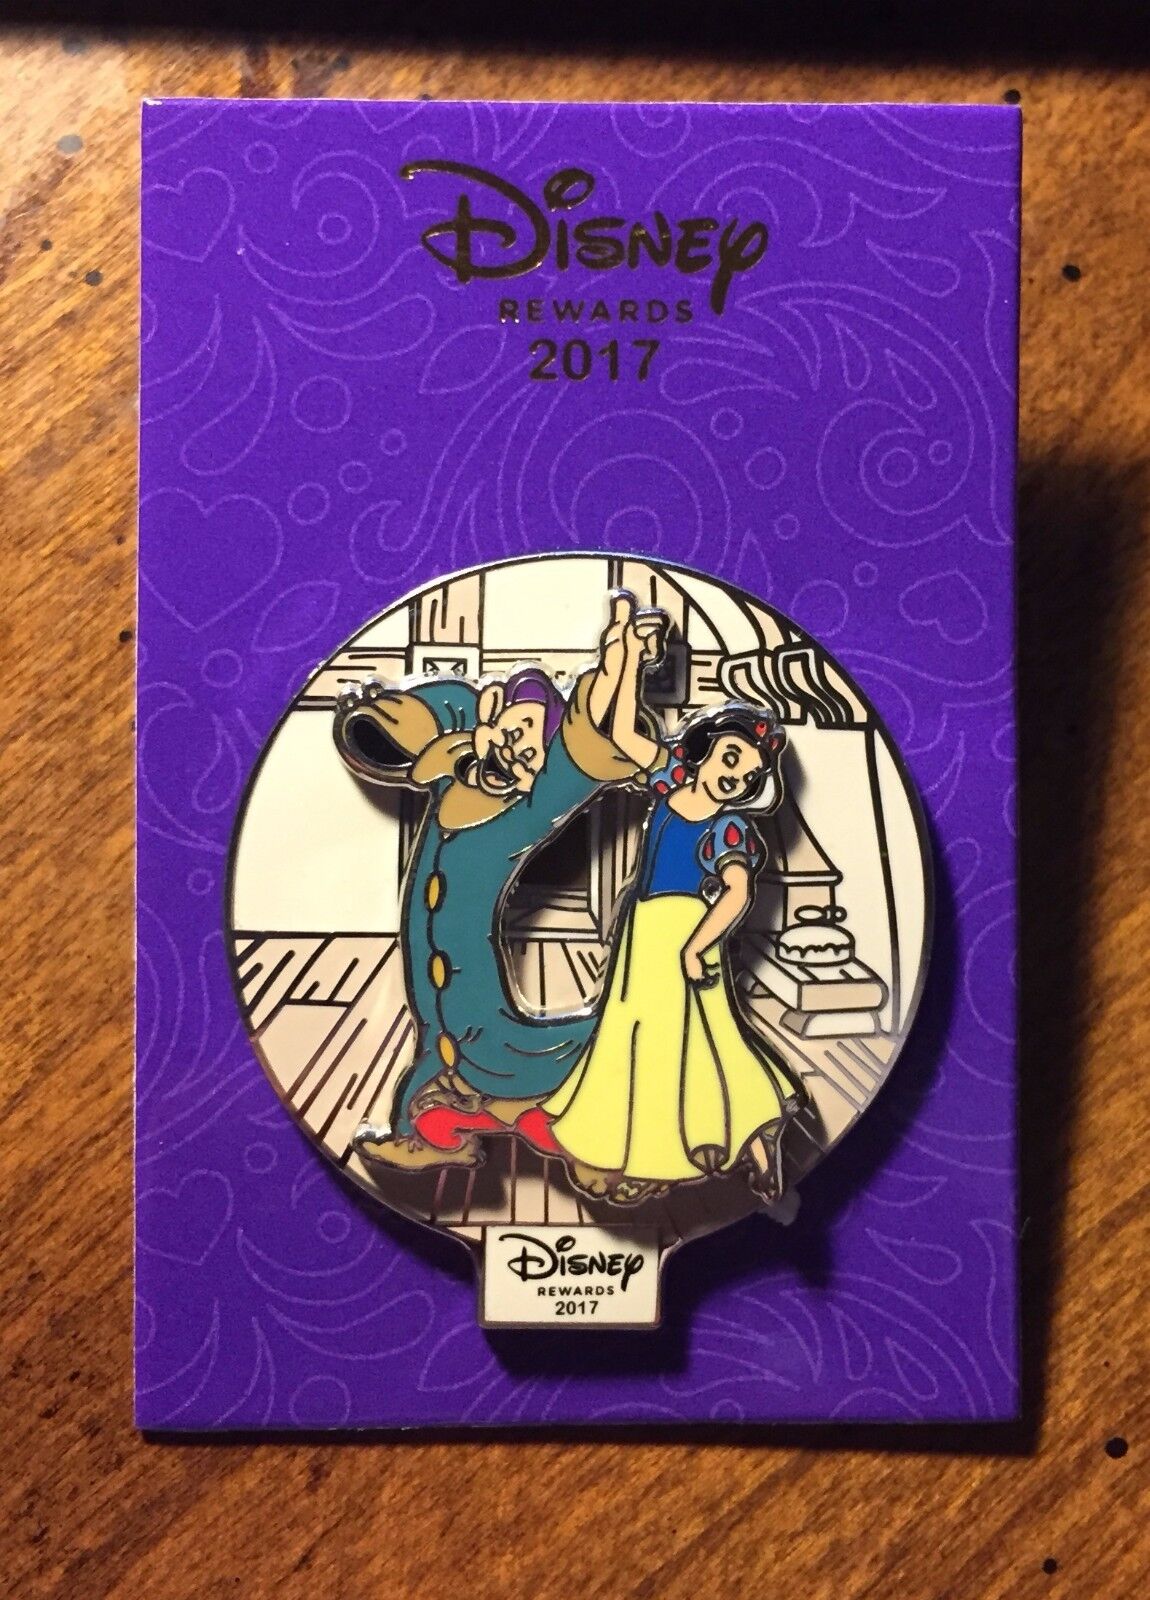 Disney Visa Cardmember Slider Pin Snow White 2017